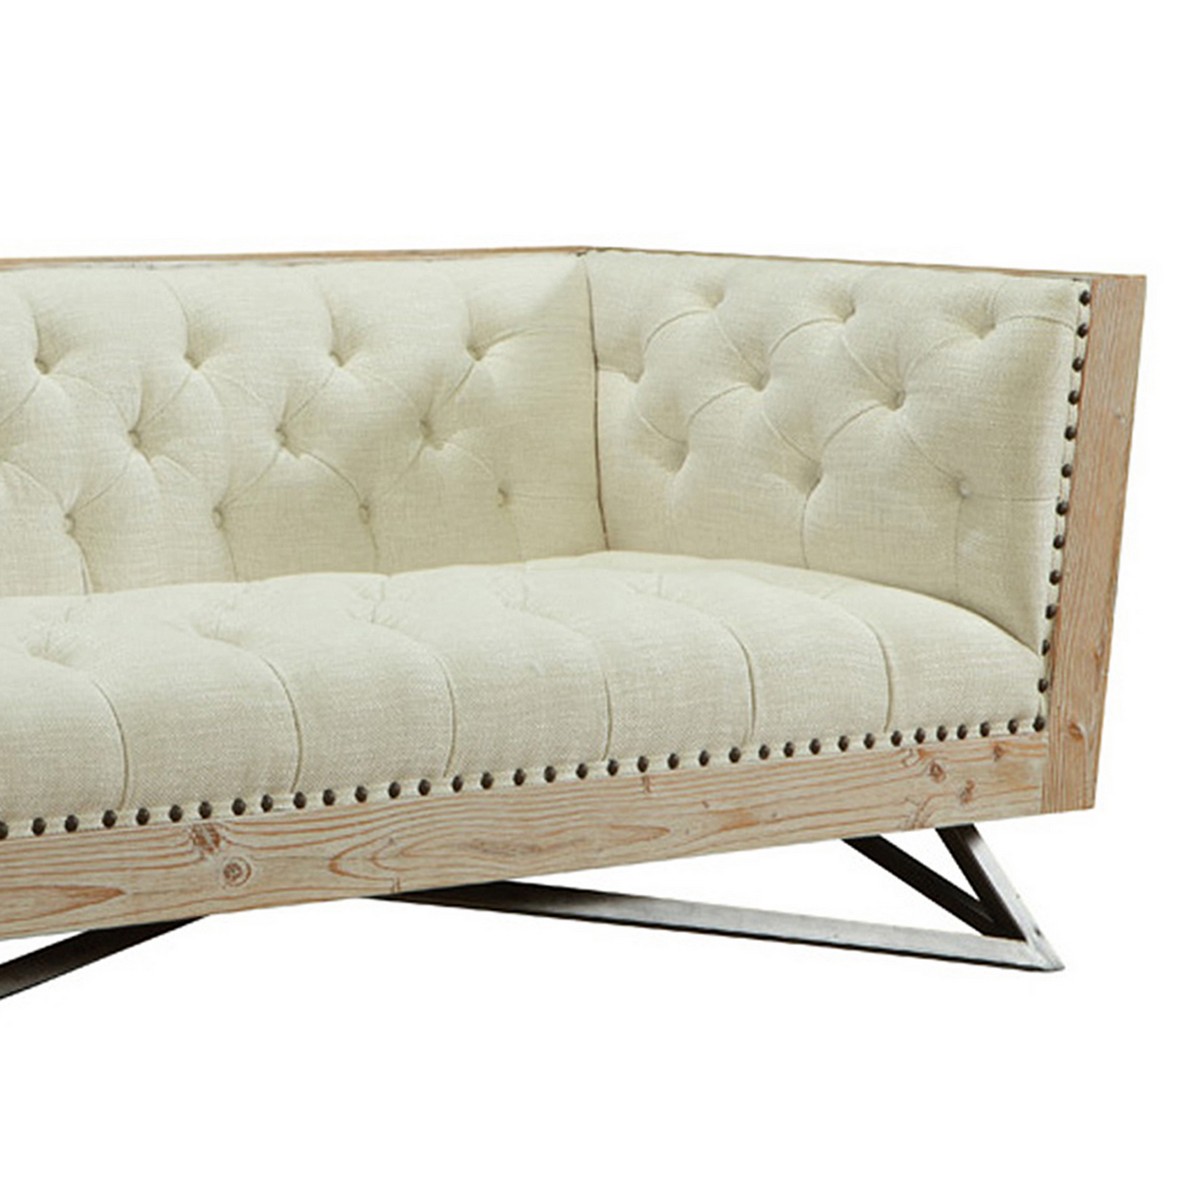 Armen Living Regis Cream Sofa With Pine Frame And Gunmetal Legs